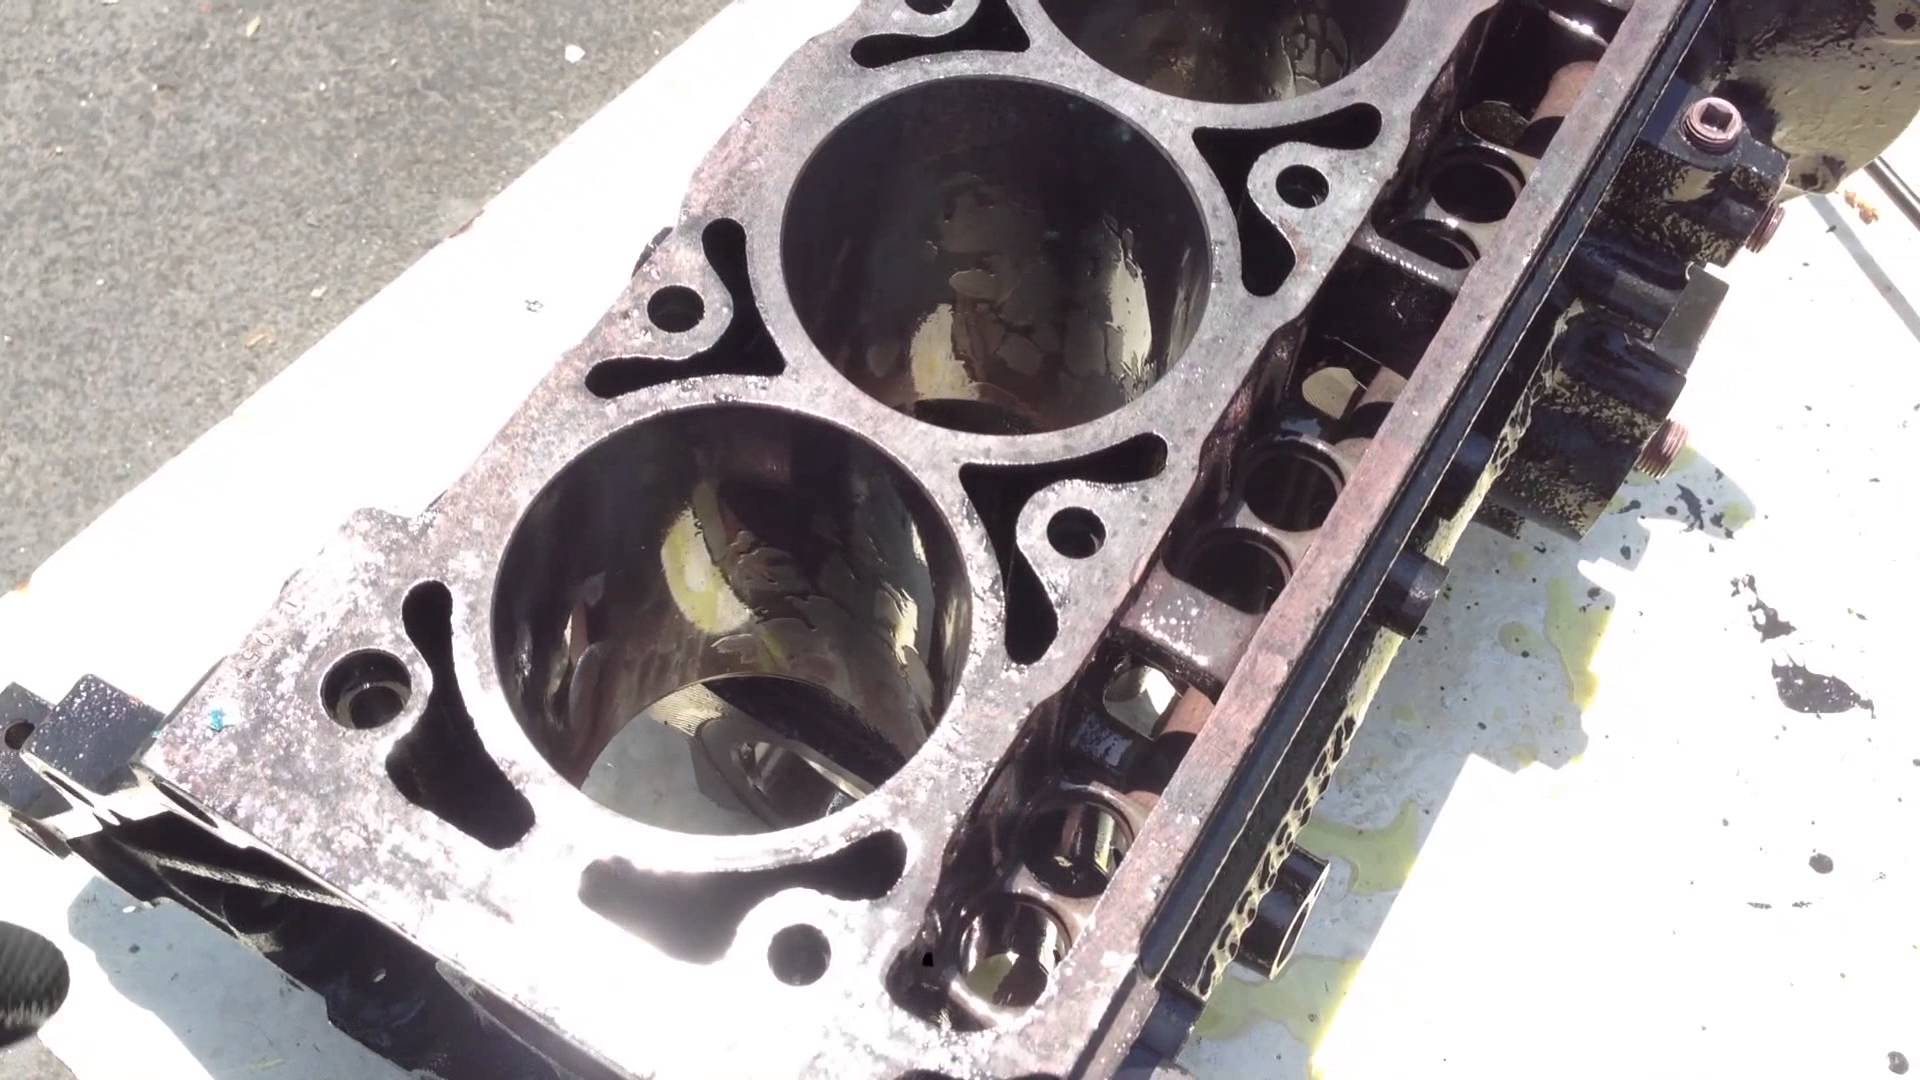 REMOVING RUST: OFF METAL ENGINE BLOCK MOTOR LIKE NEW - YouTube